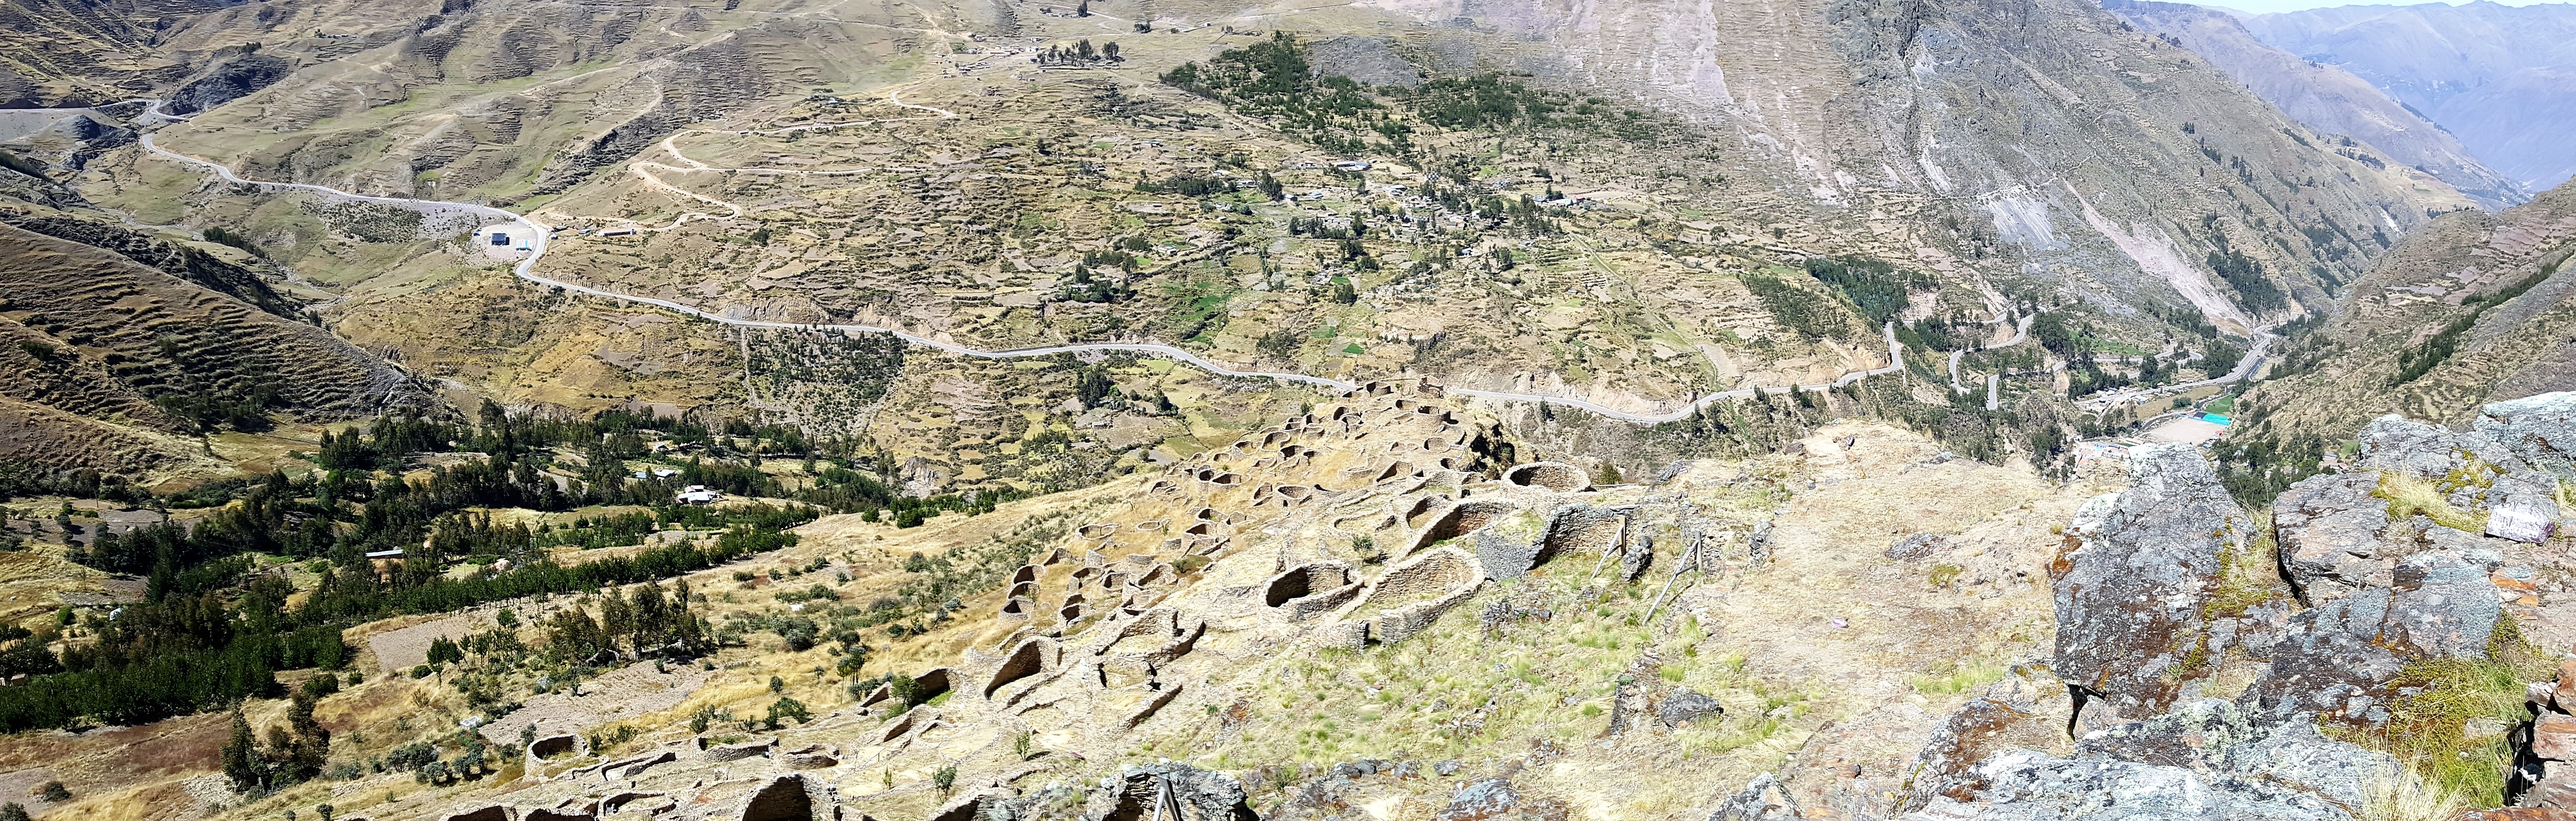 Copy of Views from Ankasmarca ruins